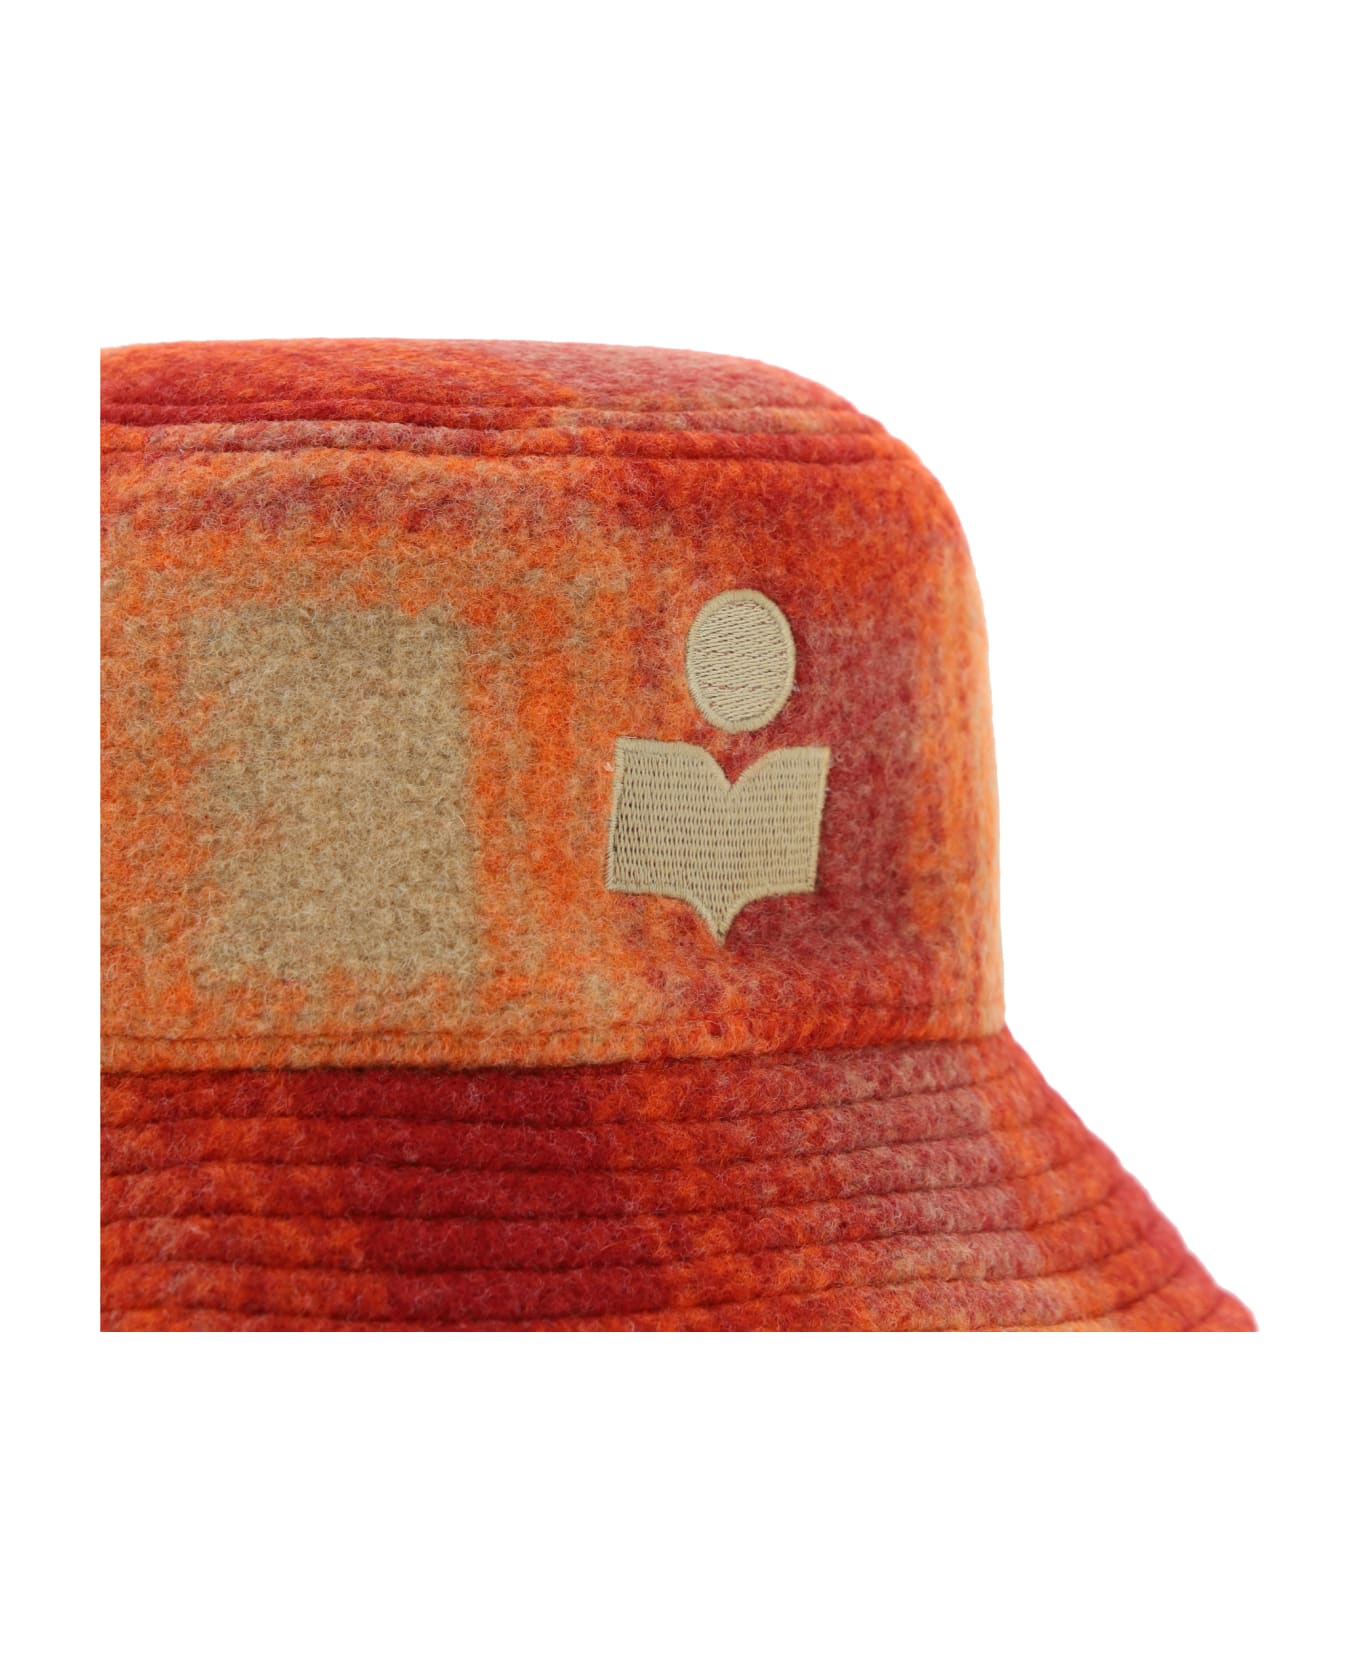 Isabel Marant Haley Bucket Hat - Orange 帽子